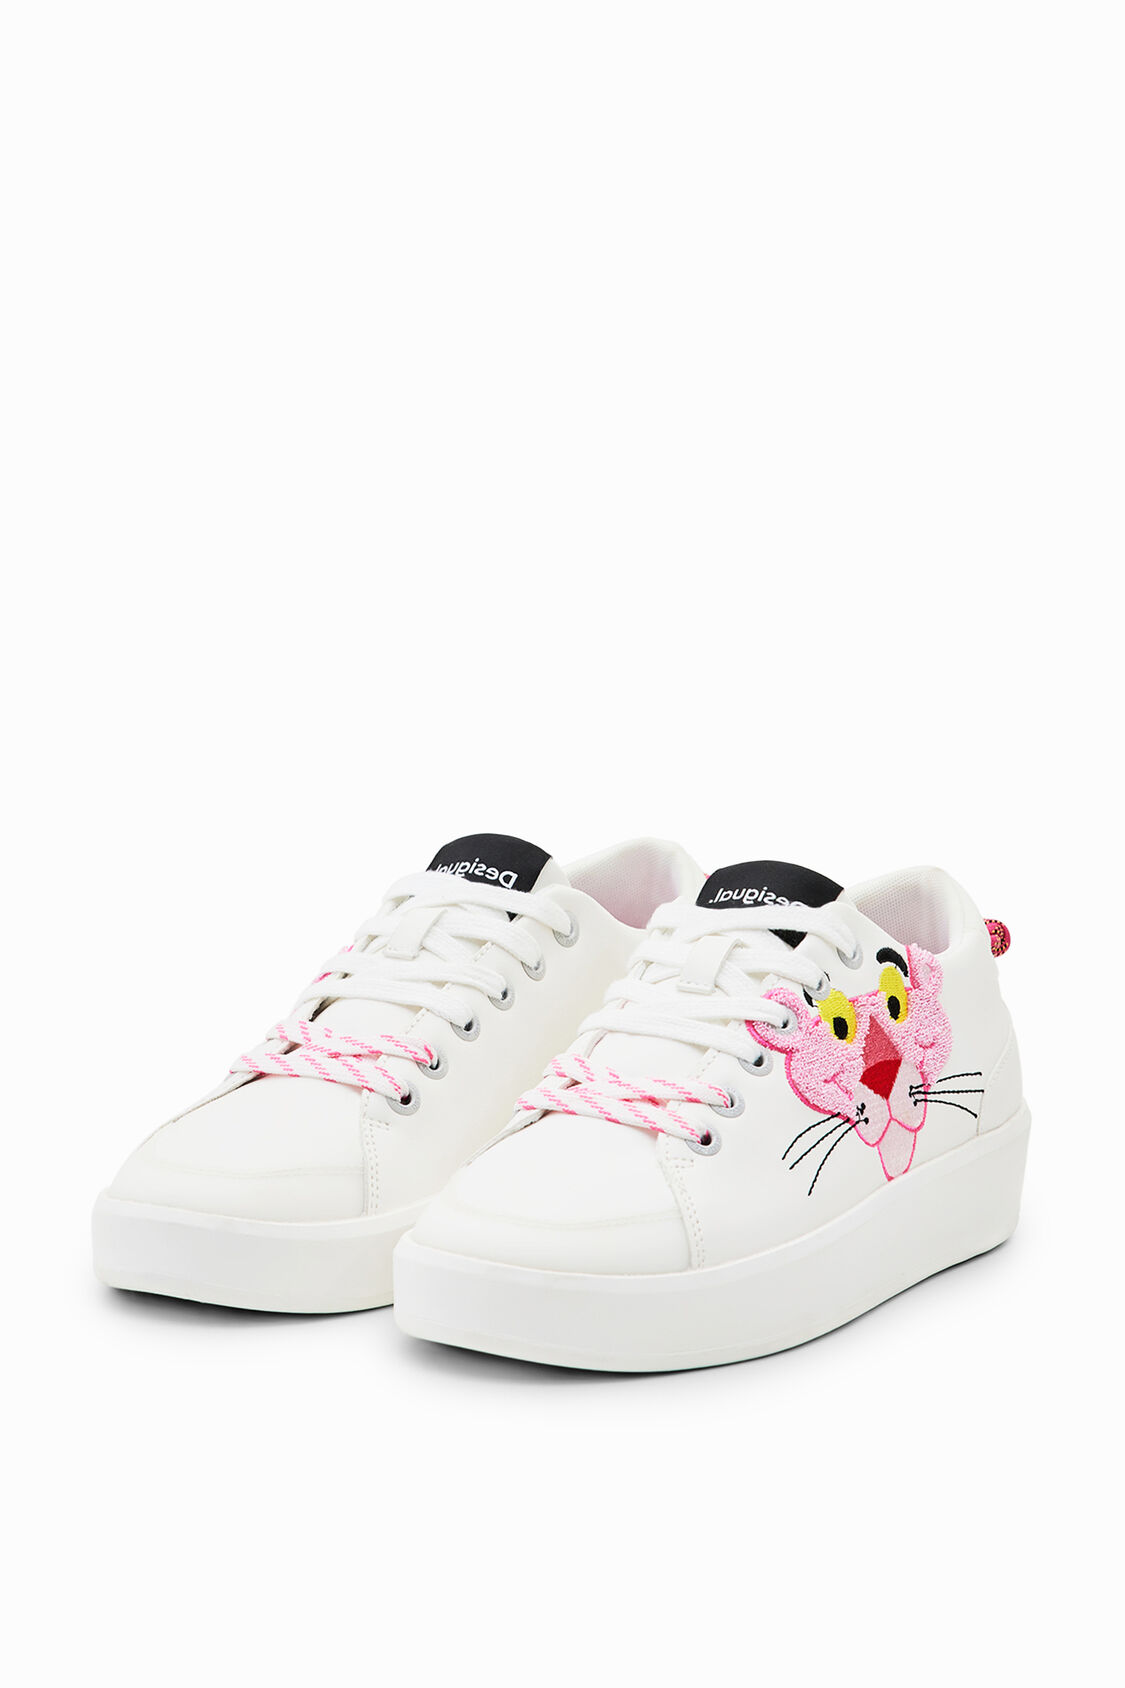 Humilde dedo Mediar Sneakers plataforma Pink Panther | Desigual.com